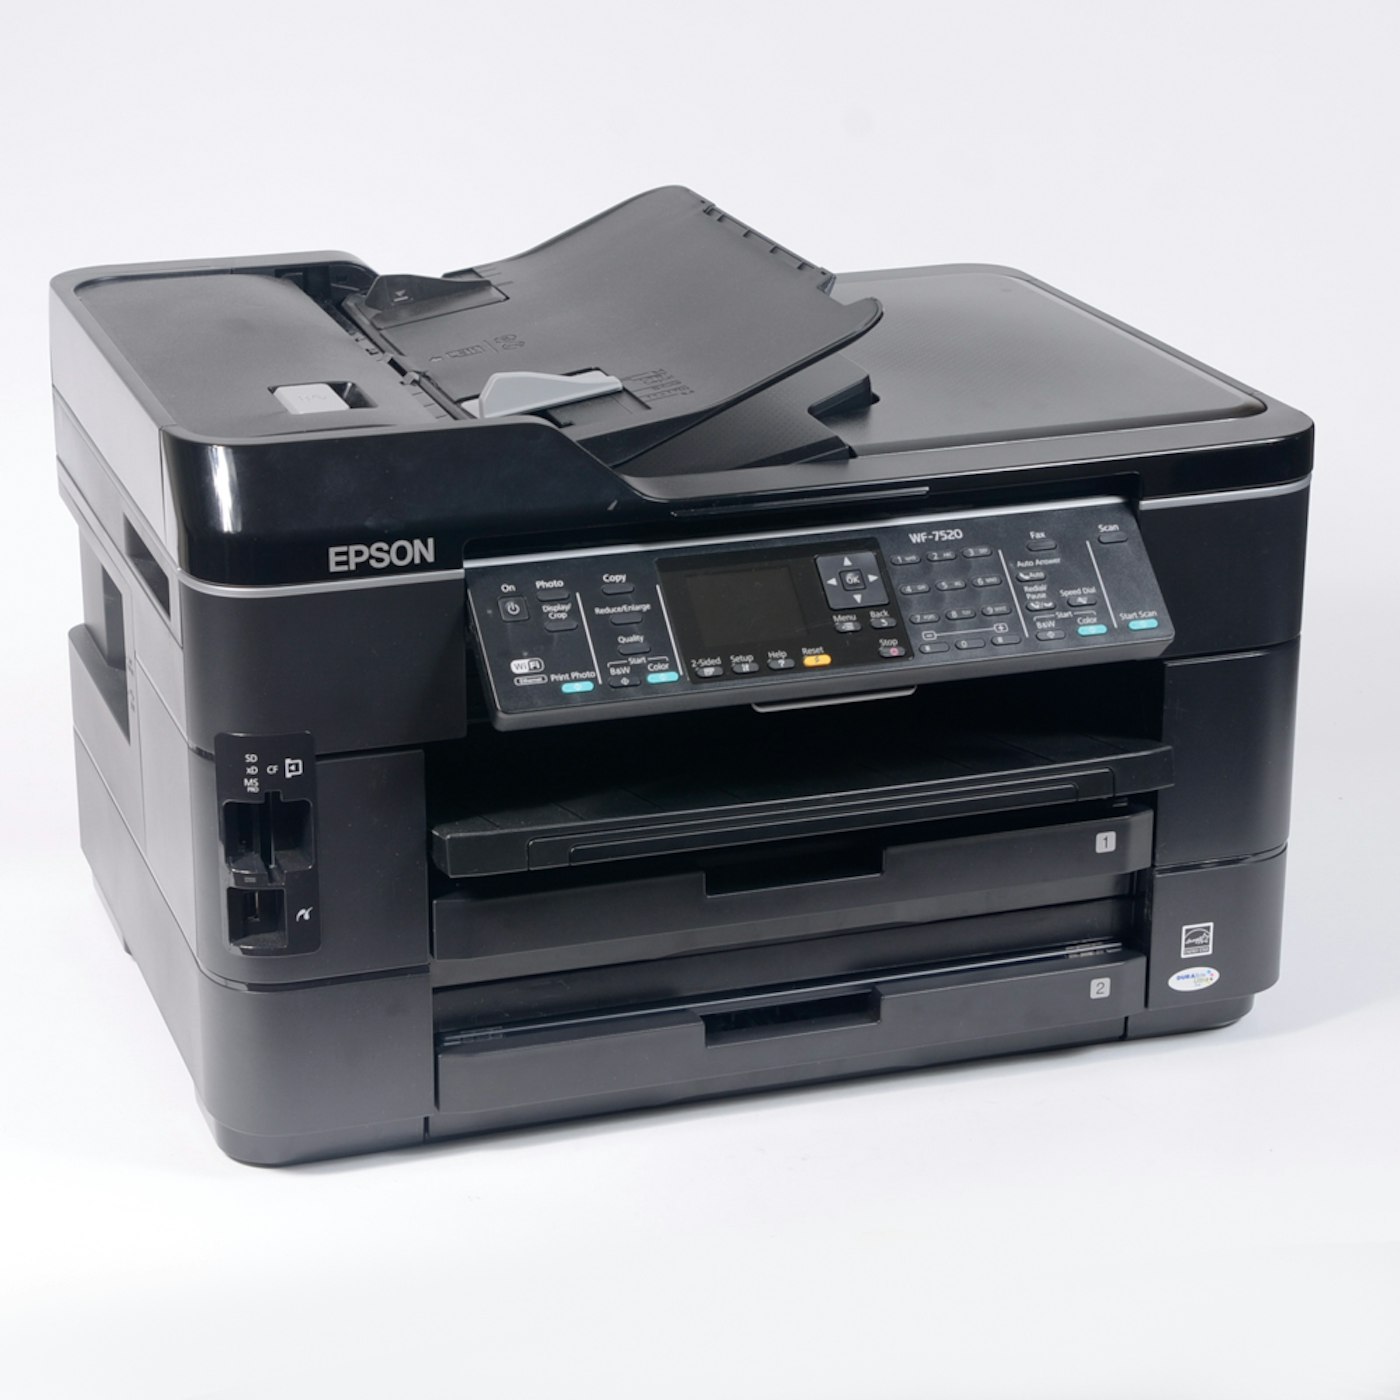 Epson Workforce Wf 7520 All In One Printer Ebth 1800